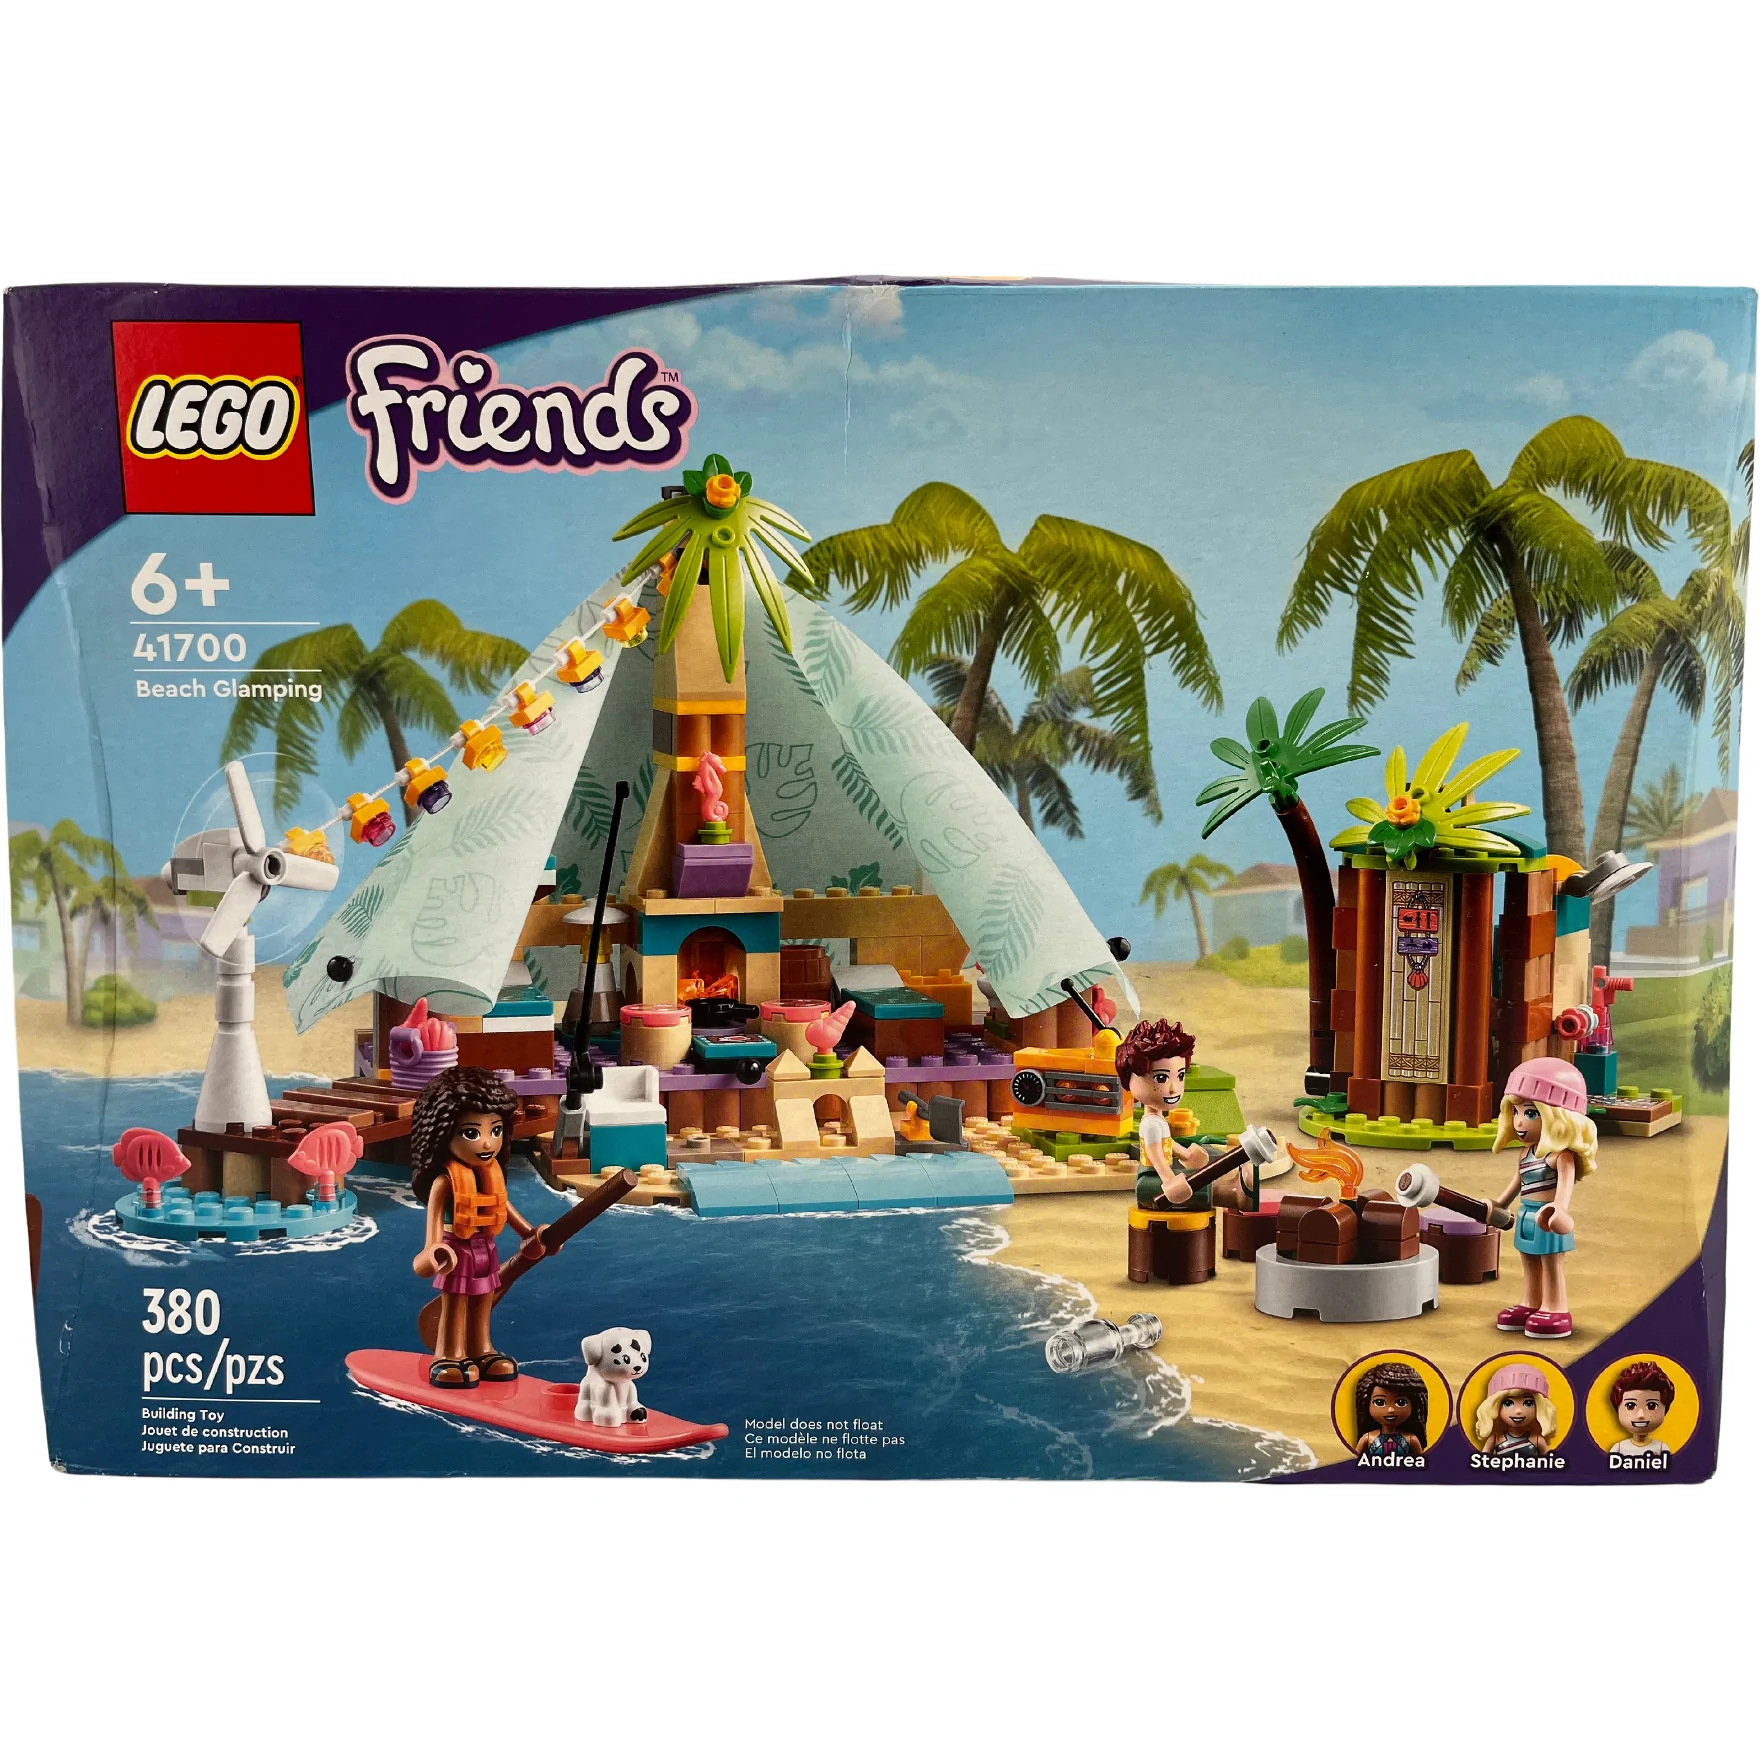 Lego Friends Beach Glamping Building Set: 41700 / 6+ / 380 pieces **DEALS**